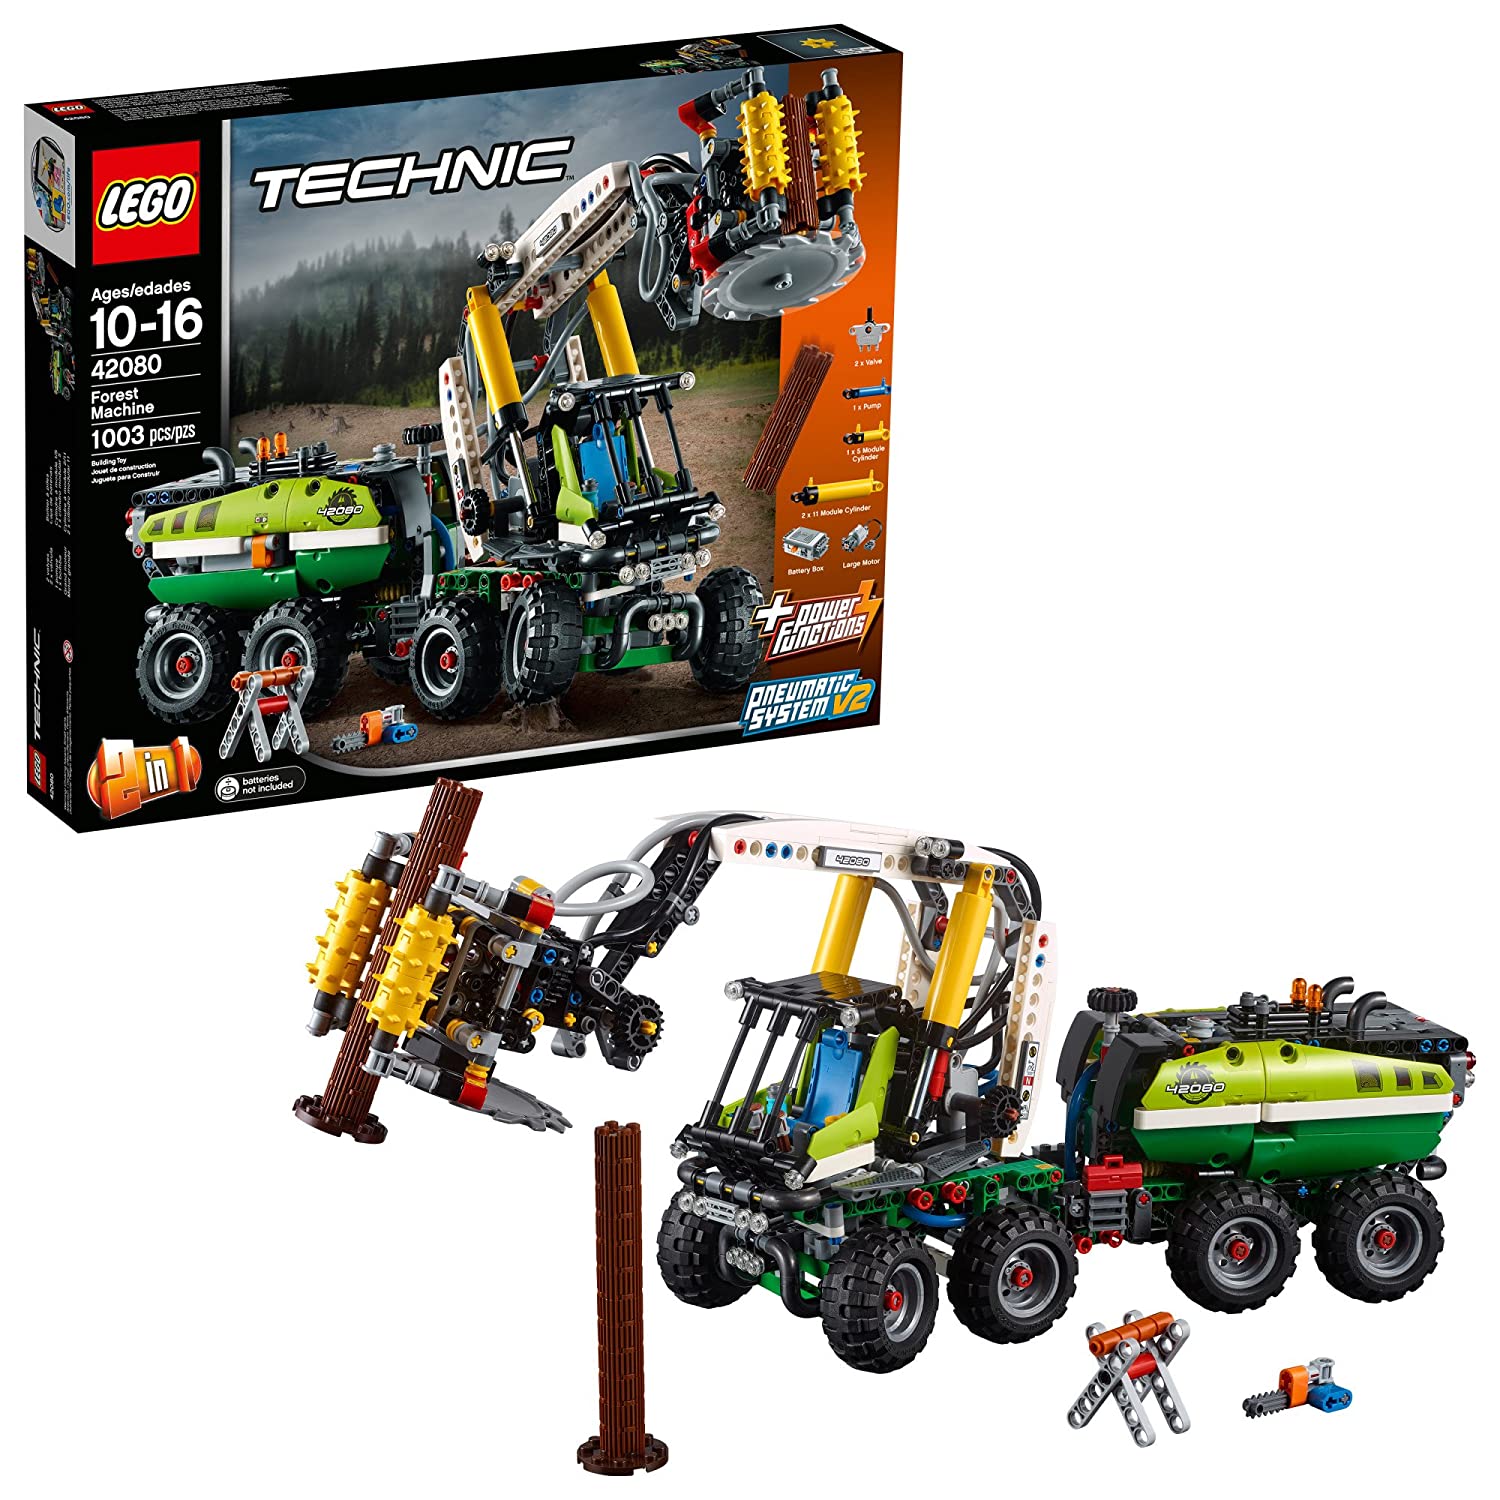 LEGO Technic Forest Machine 42080 Building Kit